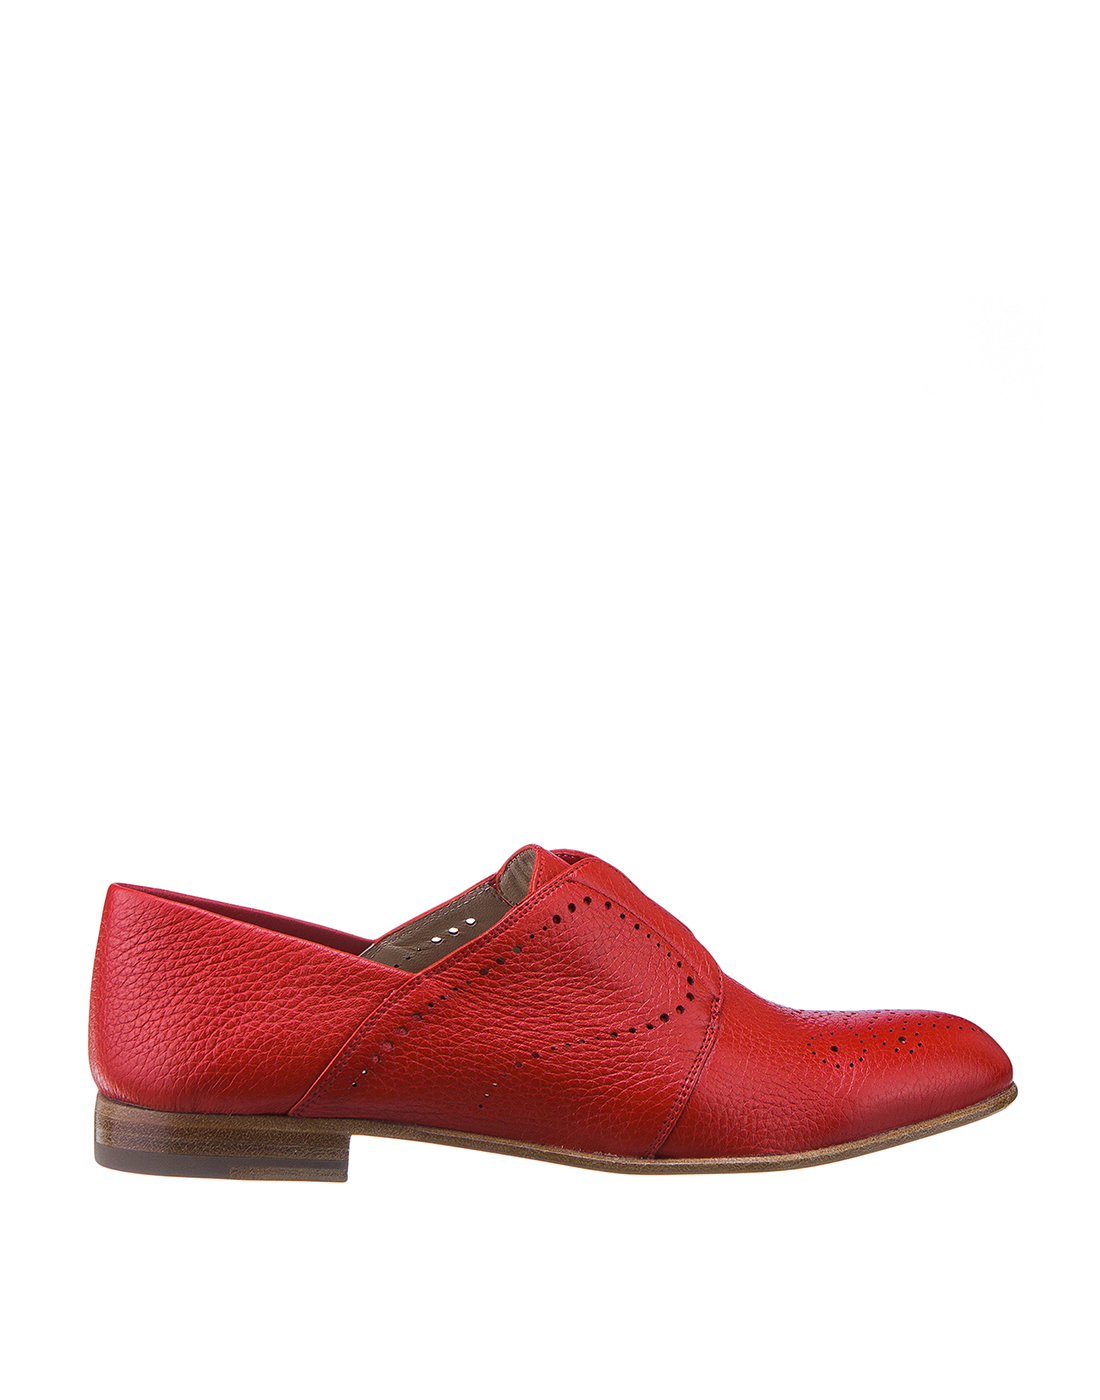 Туфли красные женские Fratelli Rossetti S66590-1